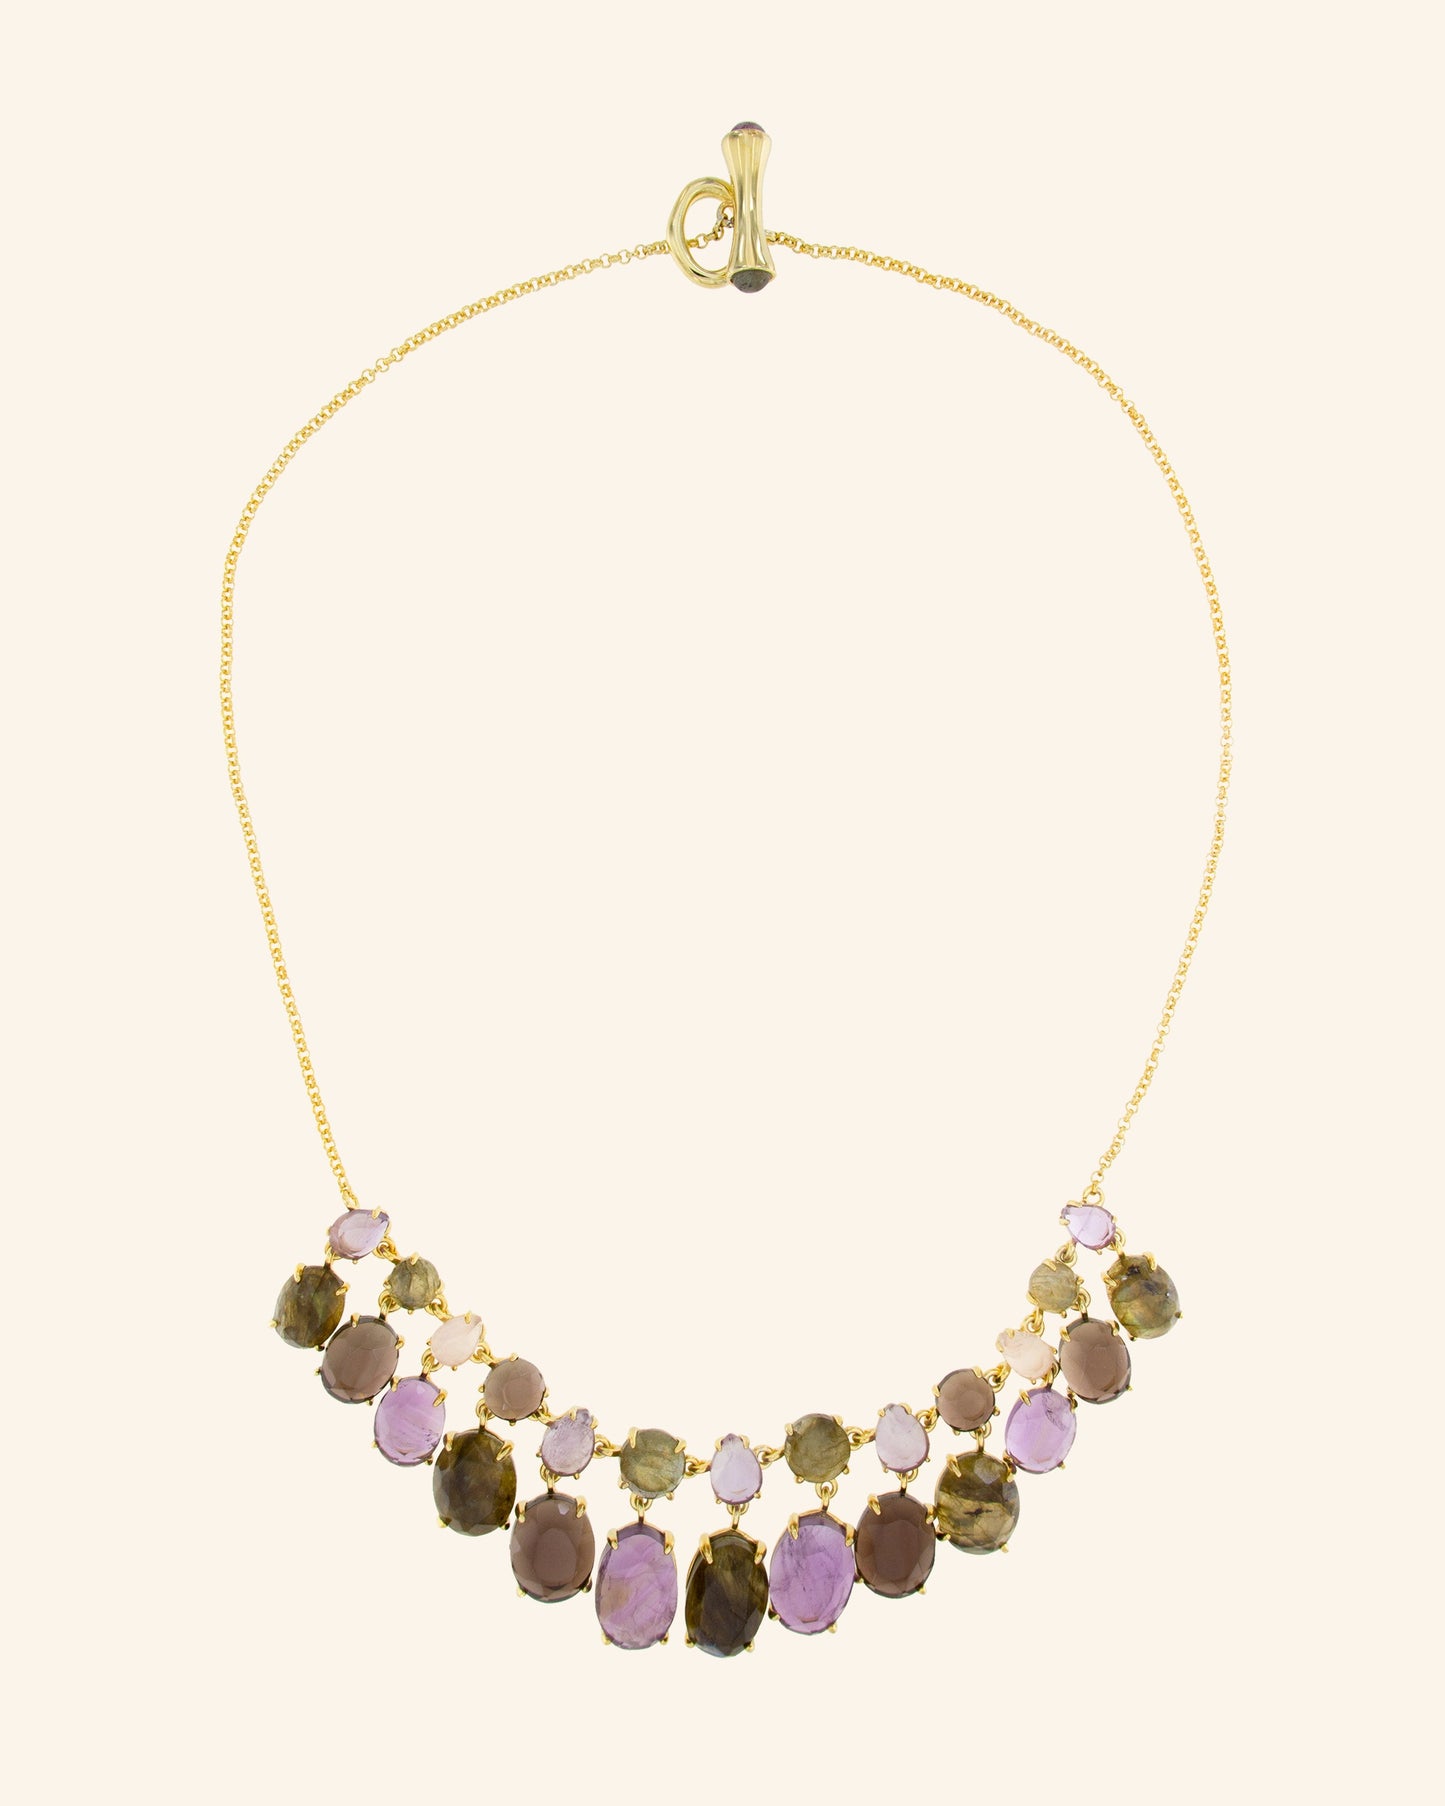 Druzy necklace with labradorite, amethyst and rose quartz